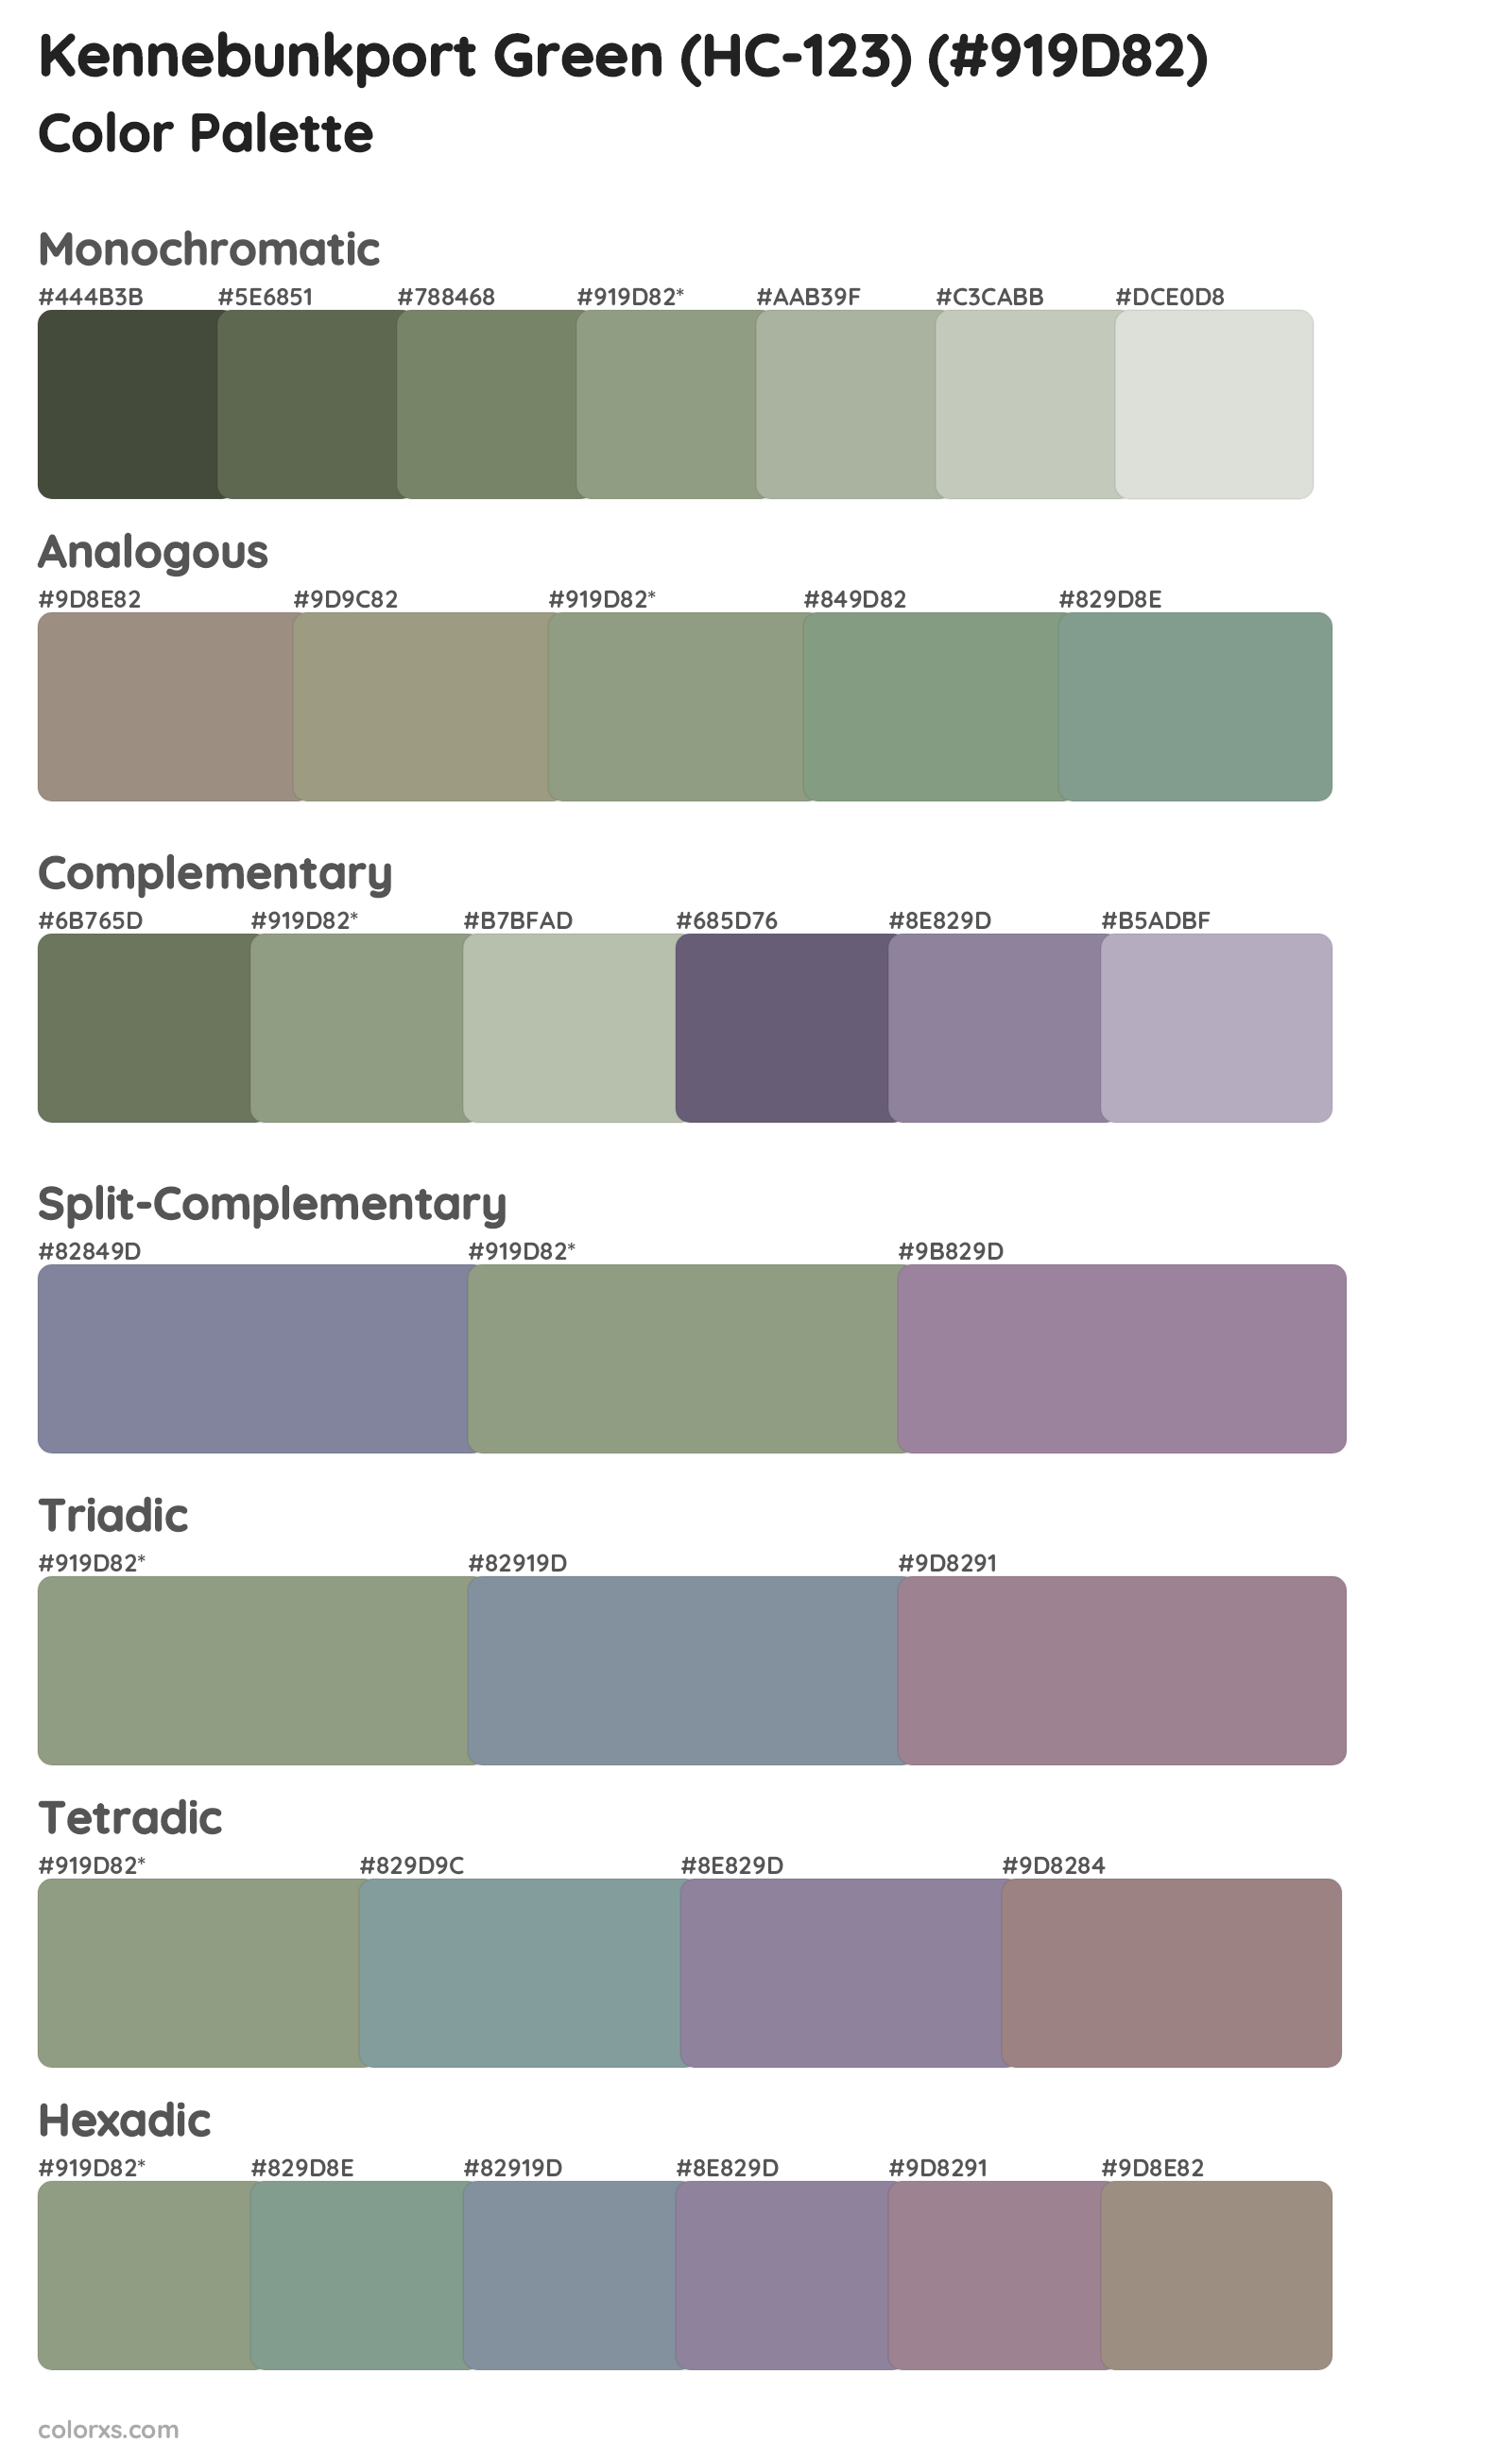 Kennebunkport Green (HC-123) Color Scheme Palettes